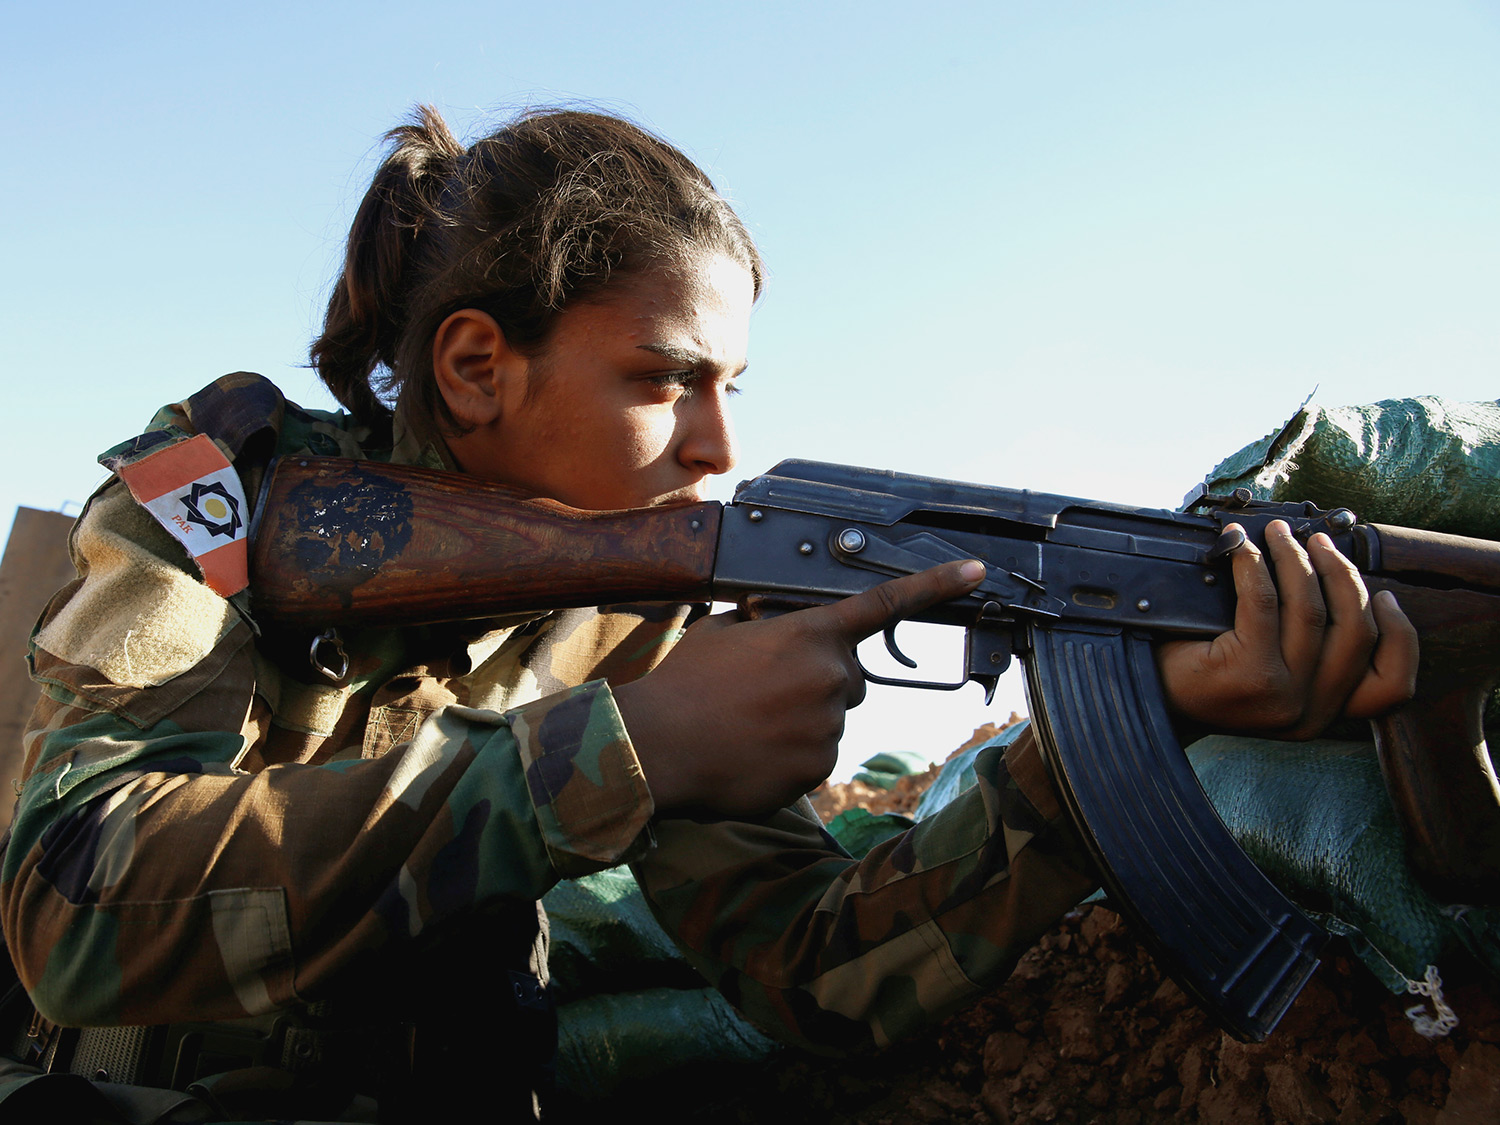 2016-11-03t174658z_1_lynxmpeca21cf_rtroptp_4_mideast-crisis-mosul-womenfighters